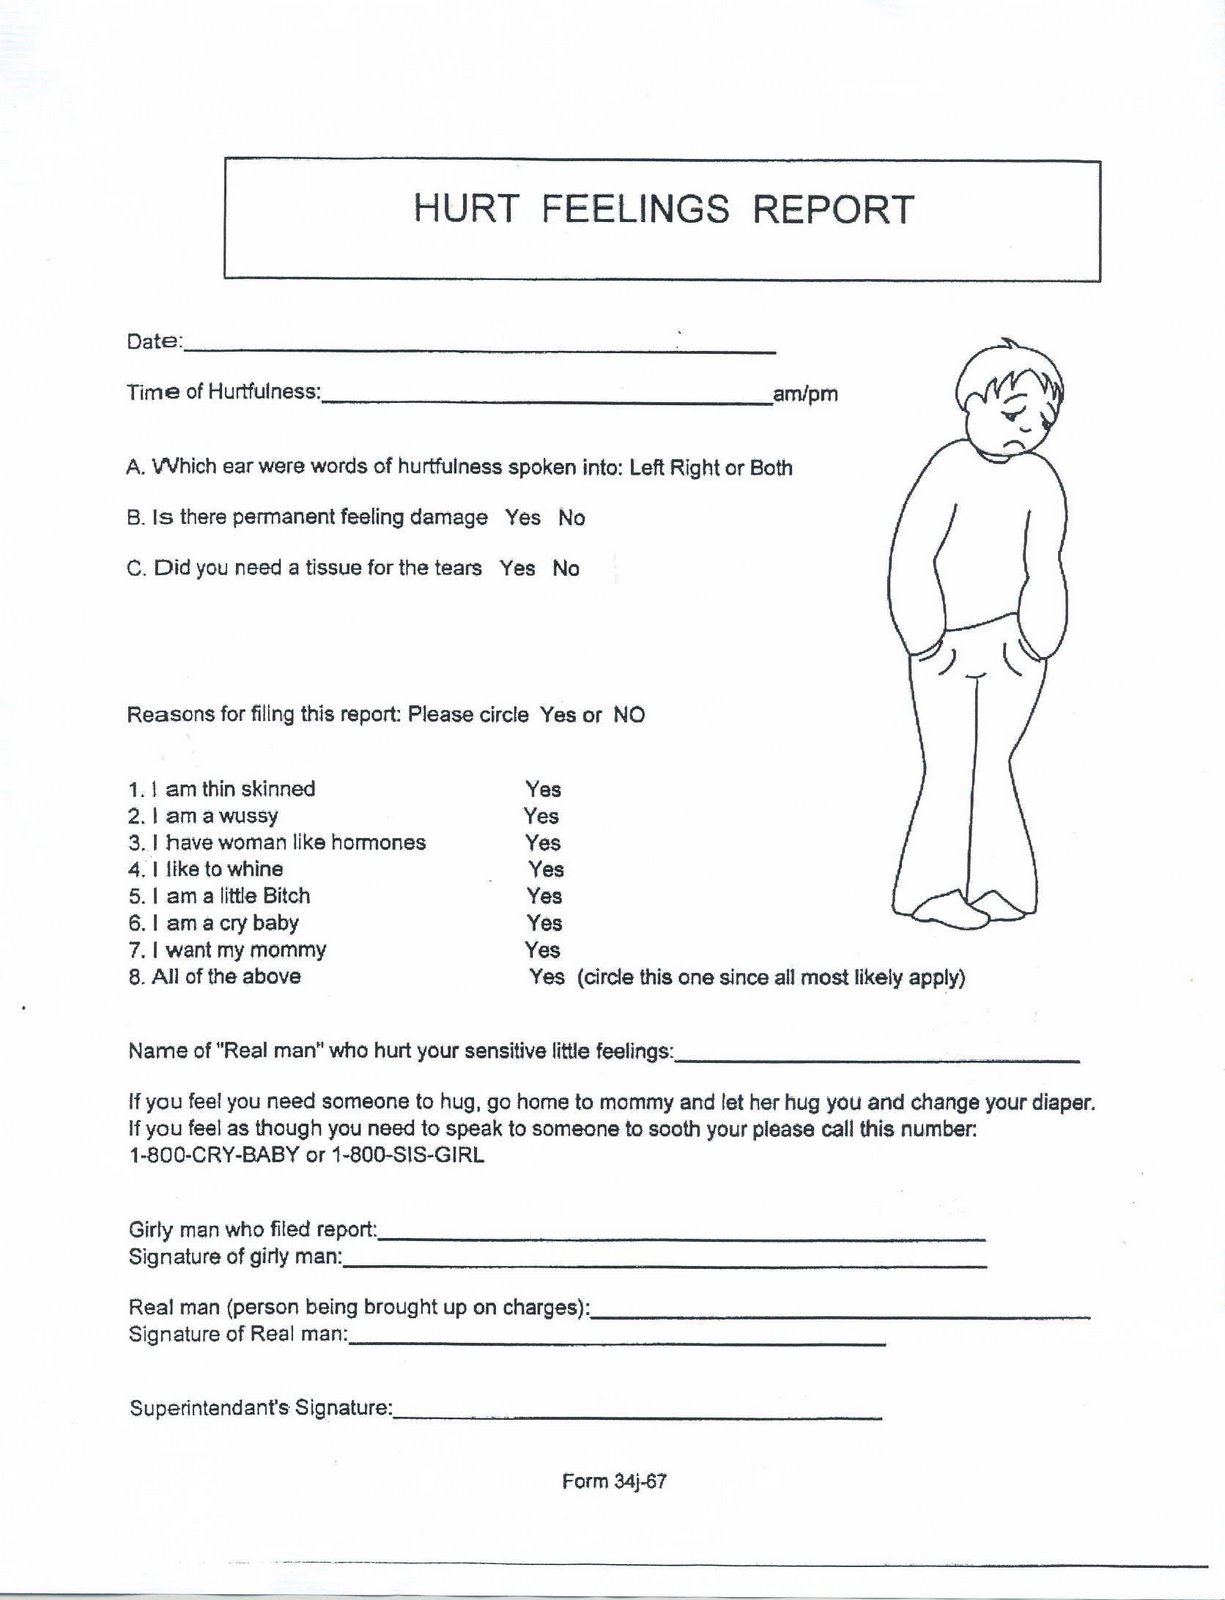 hurt feelings report pdf